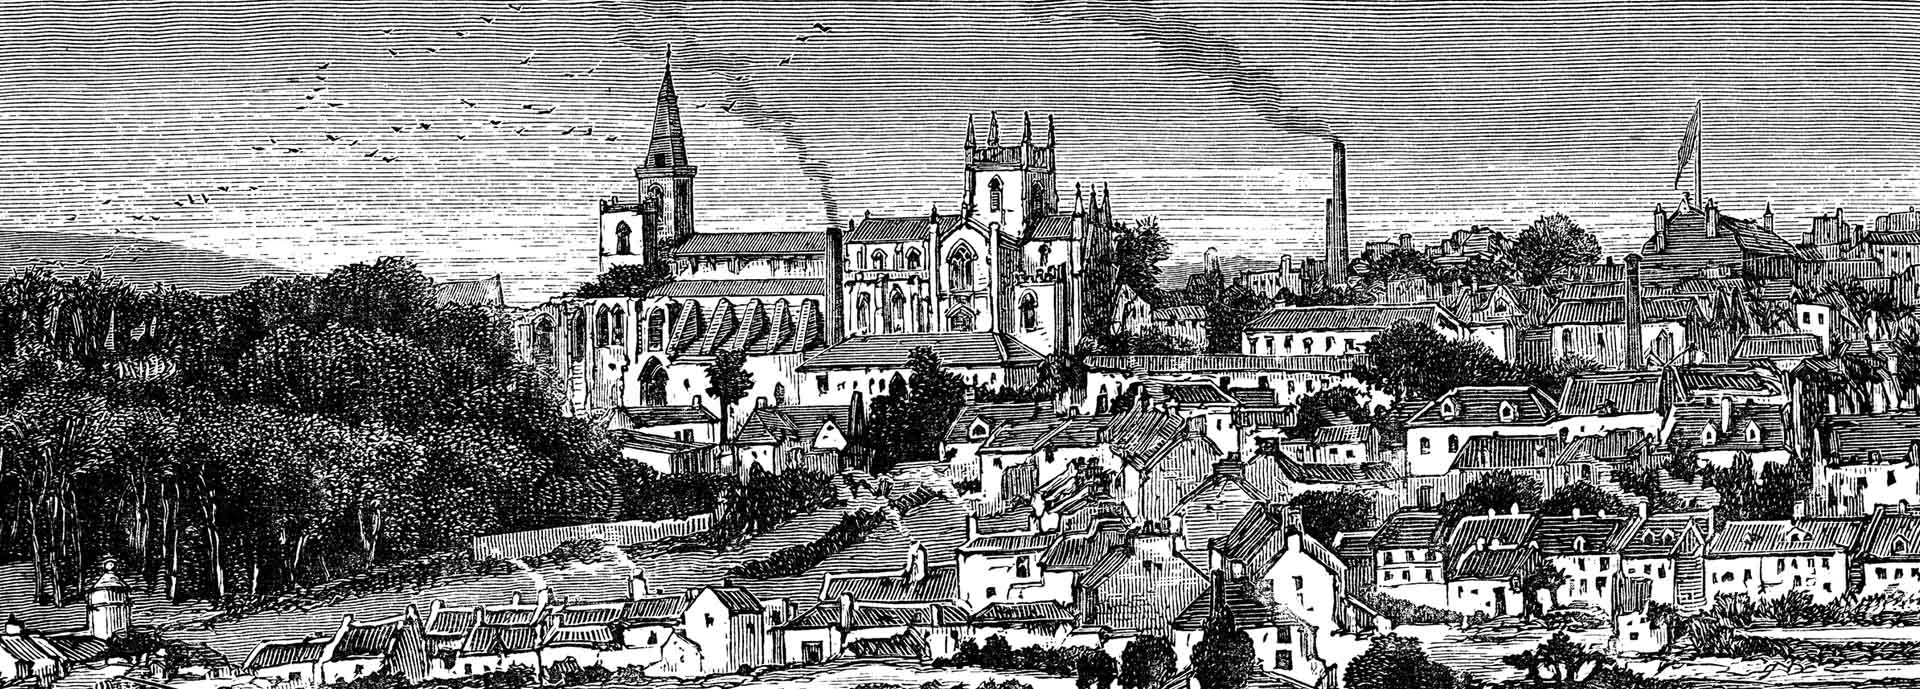 Dunfermline Abbey illustration